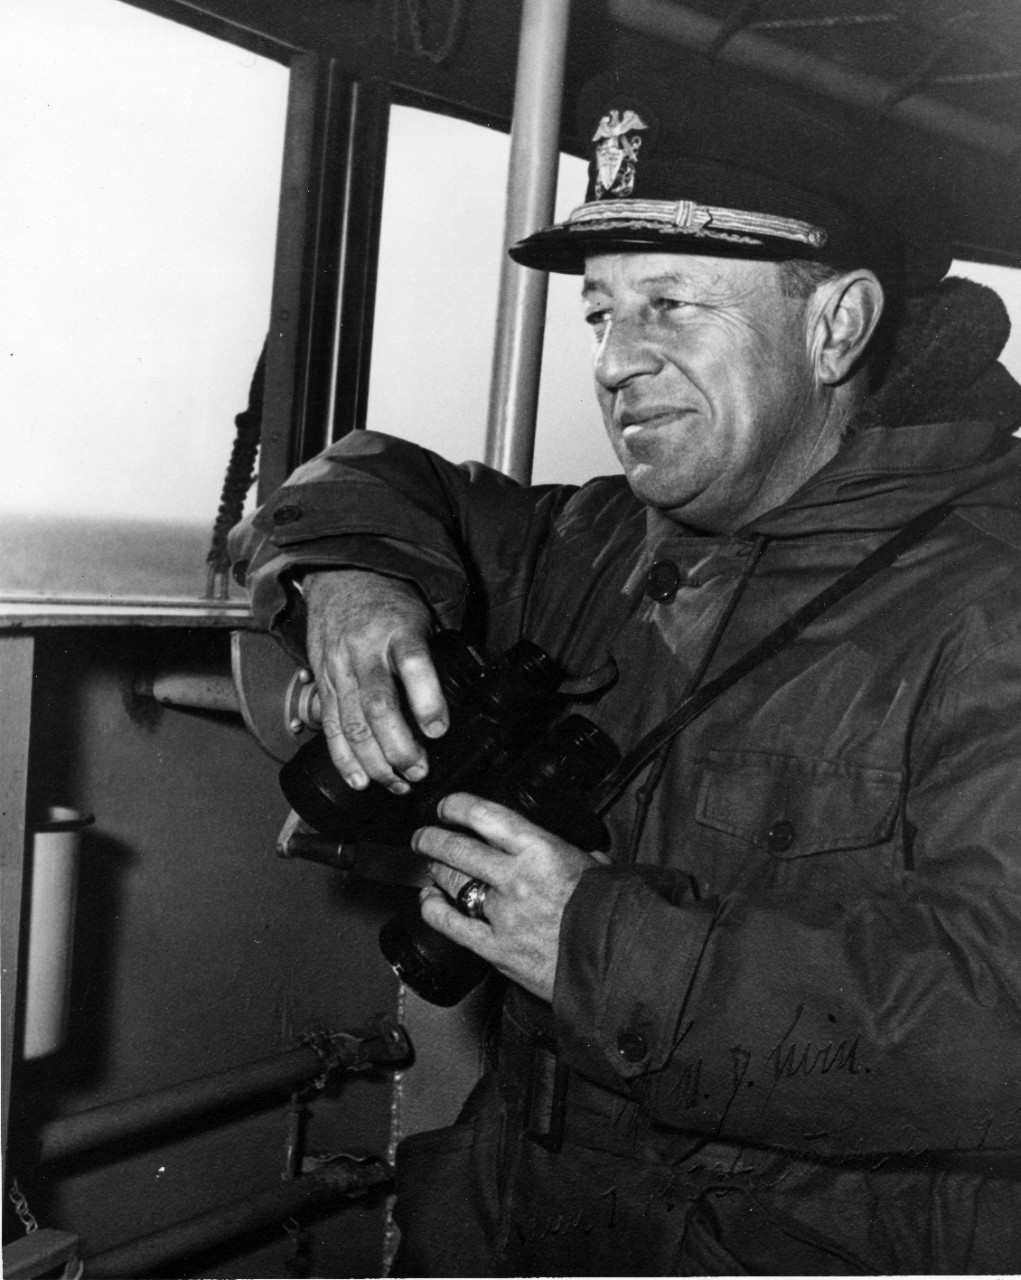 RADM William D. Irvin with binoculars aboard an unknown ship. No date. 